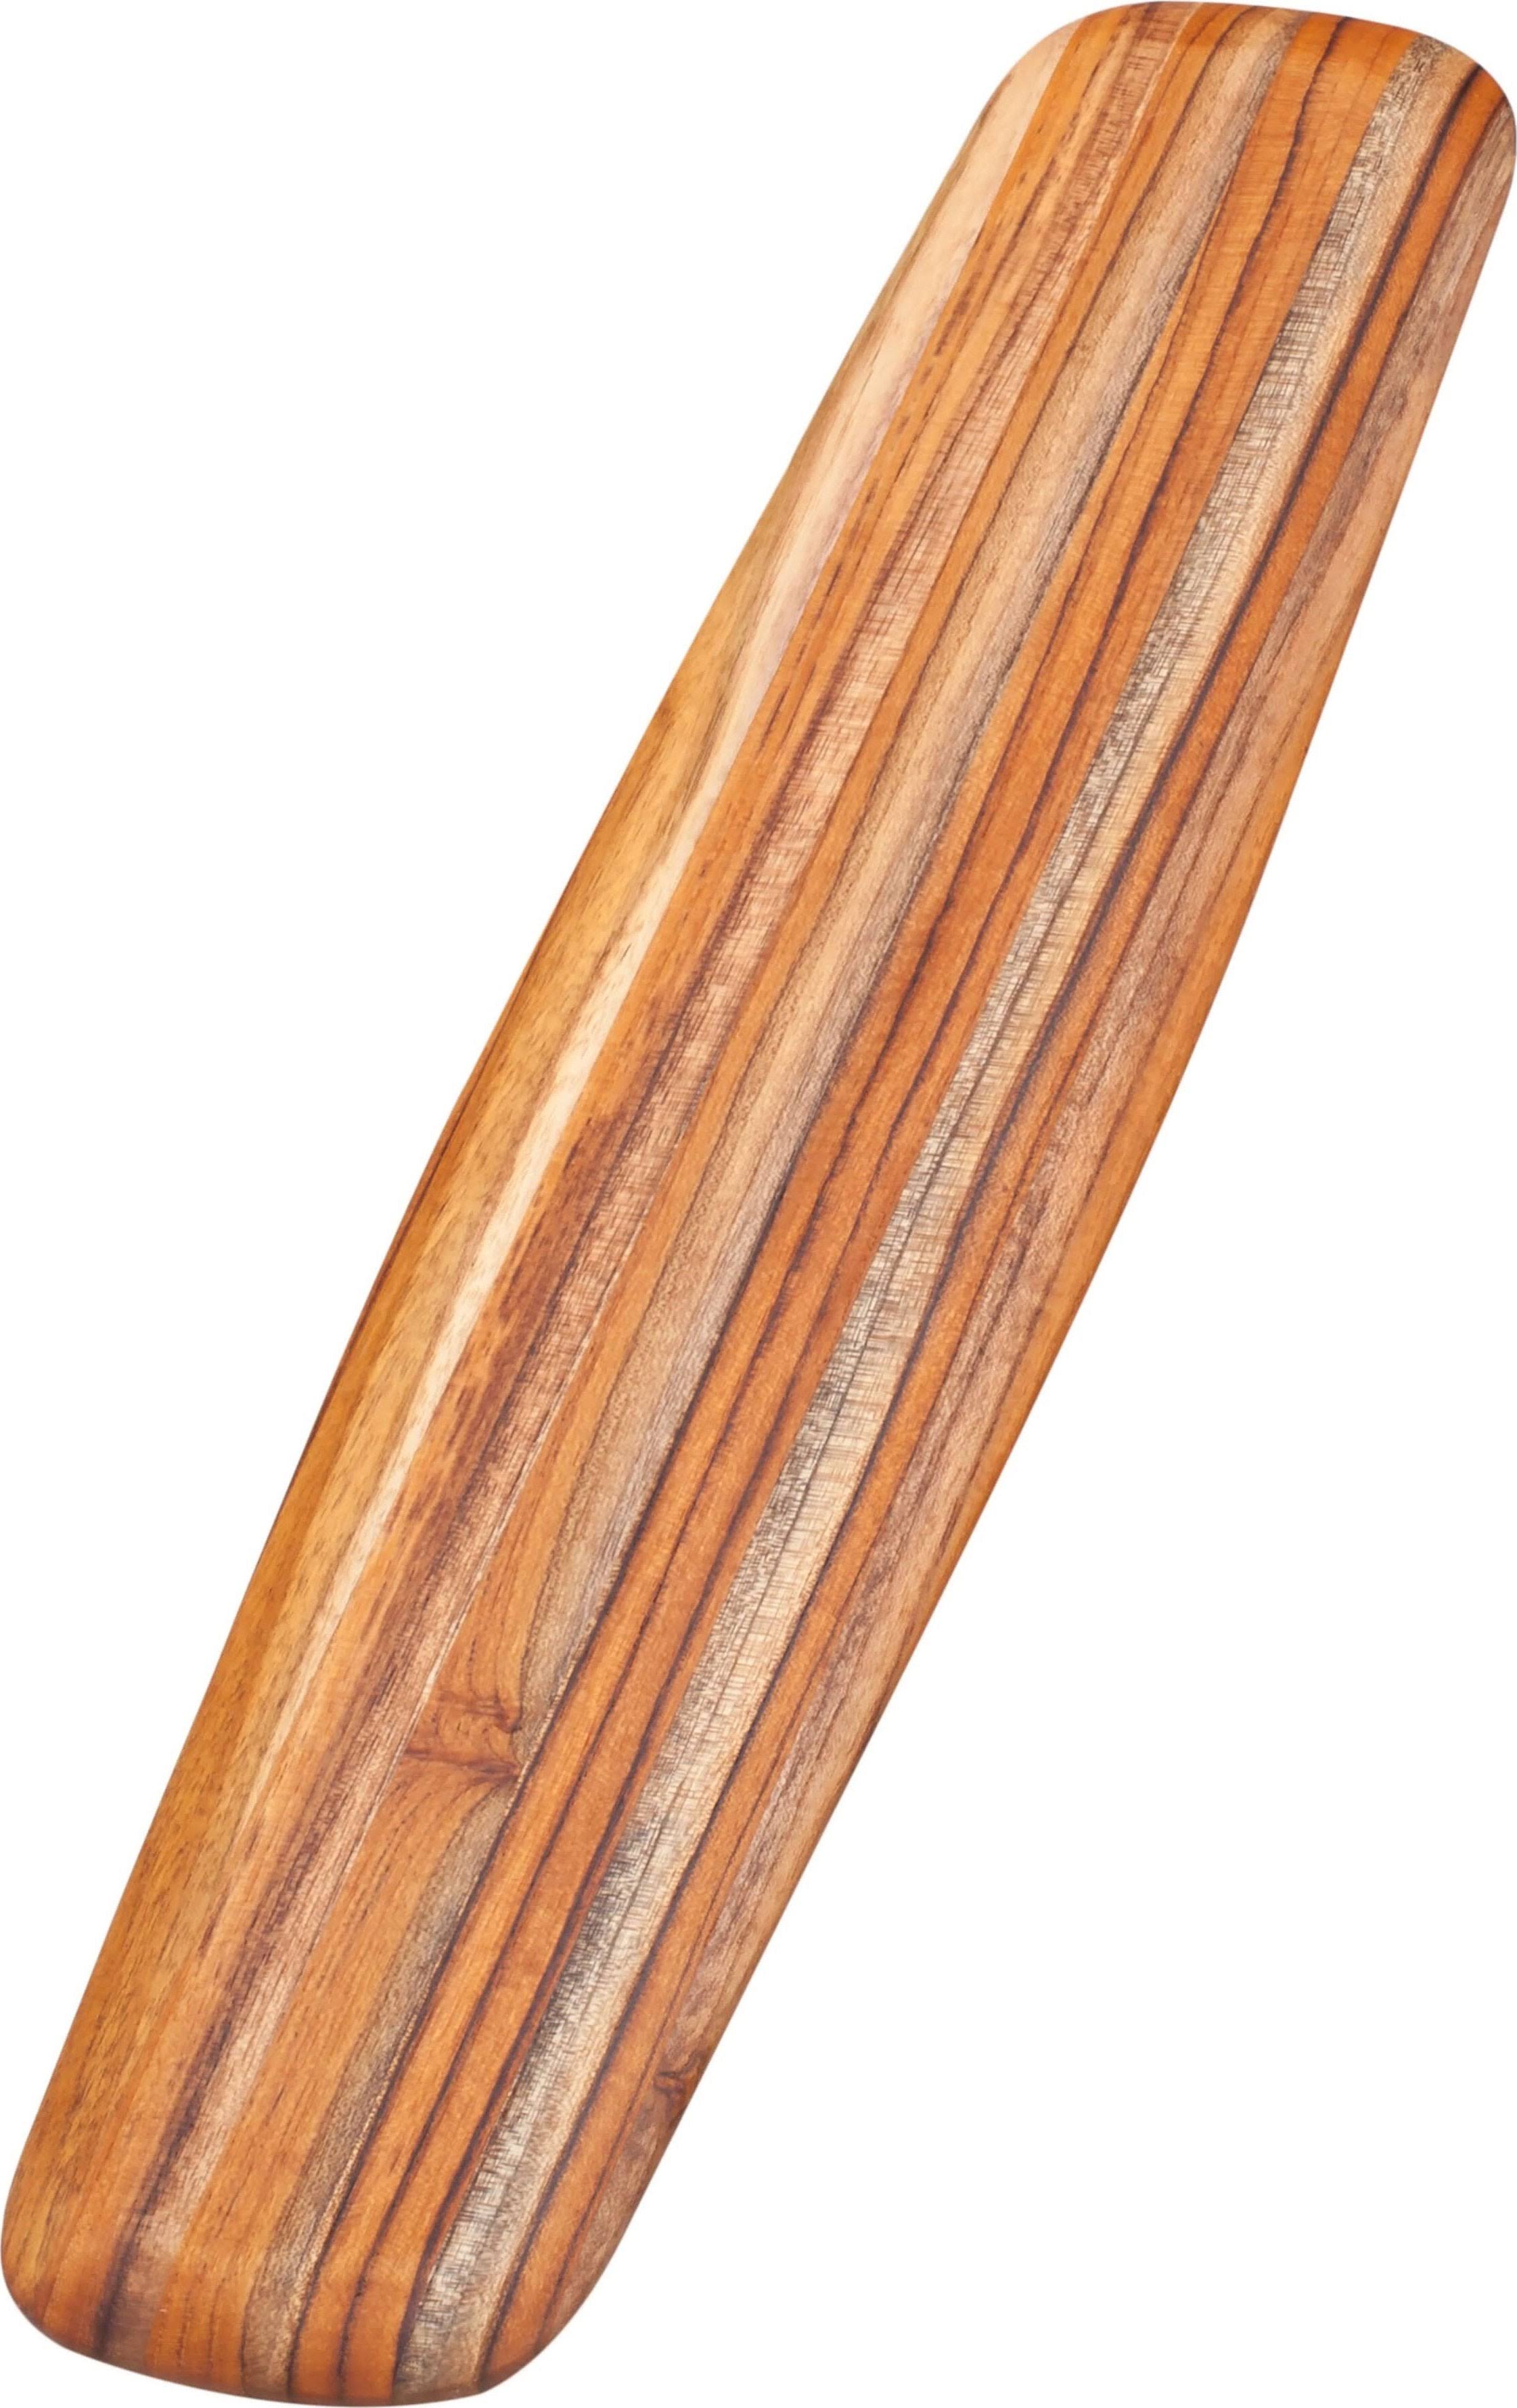 Teakhaus by Proteak Rectangle Edge Grain Wood Cutting Board